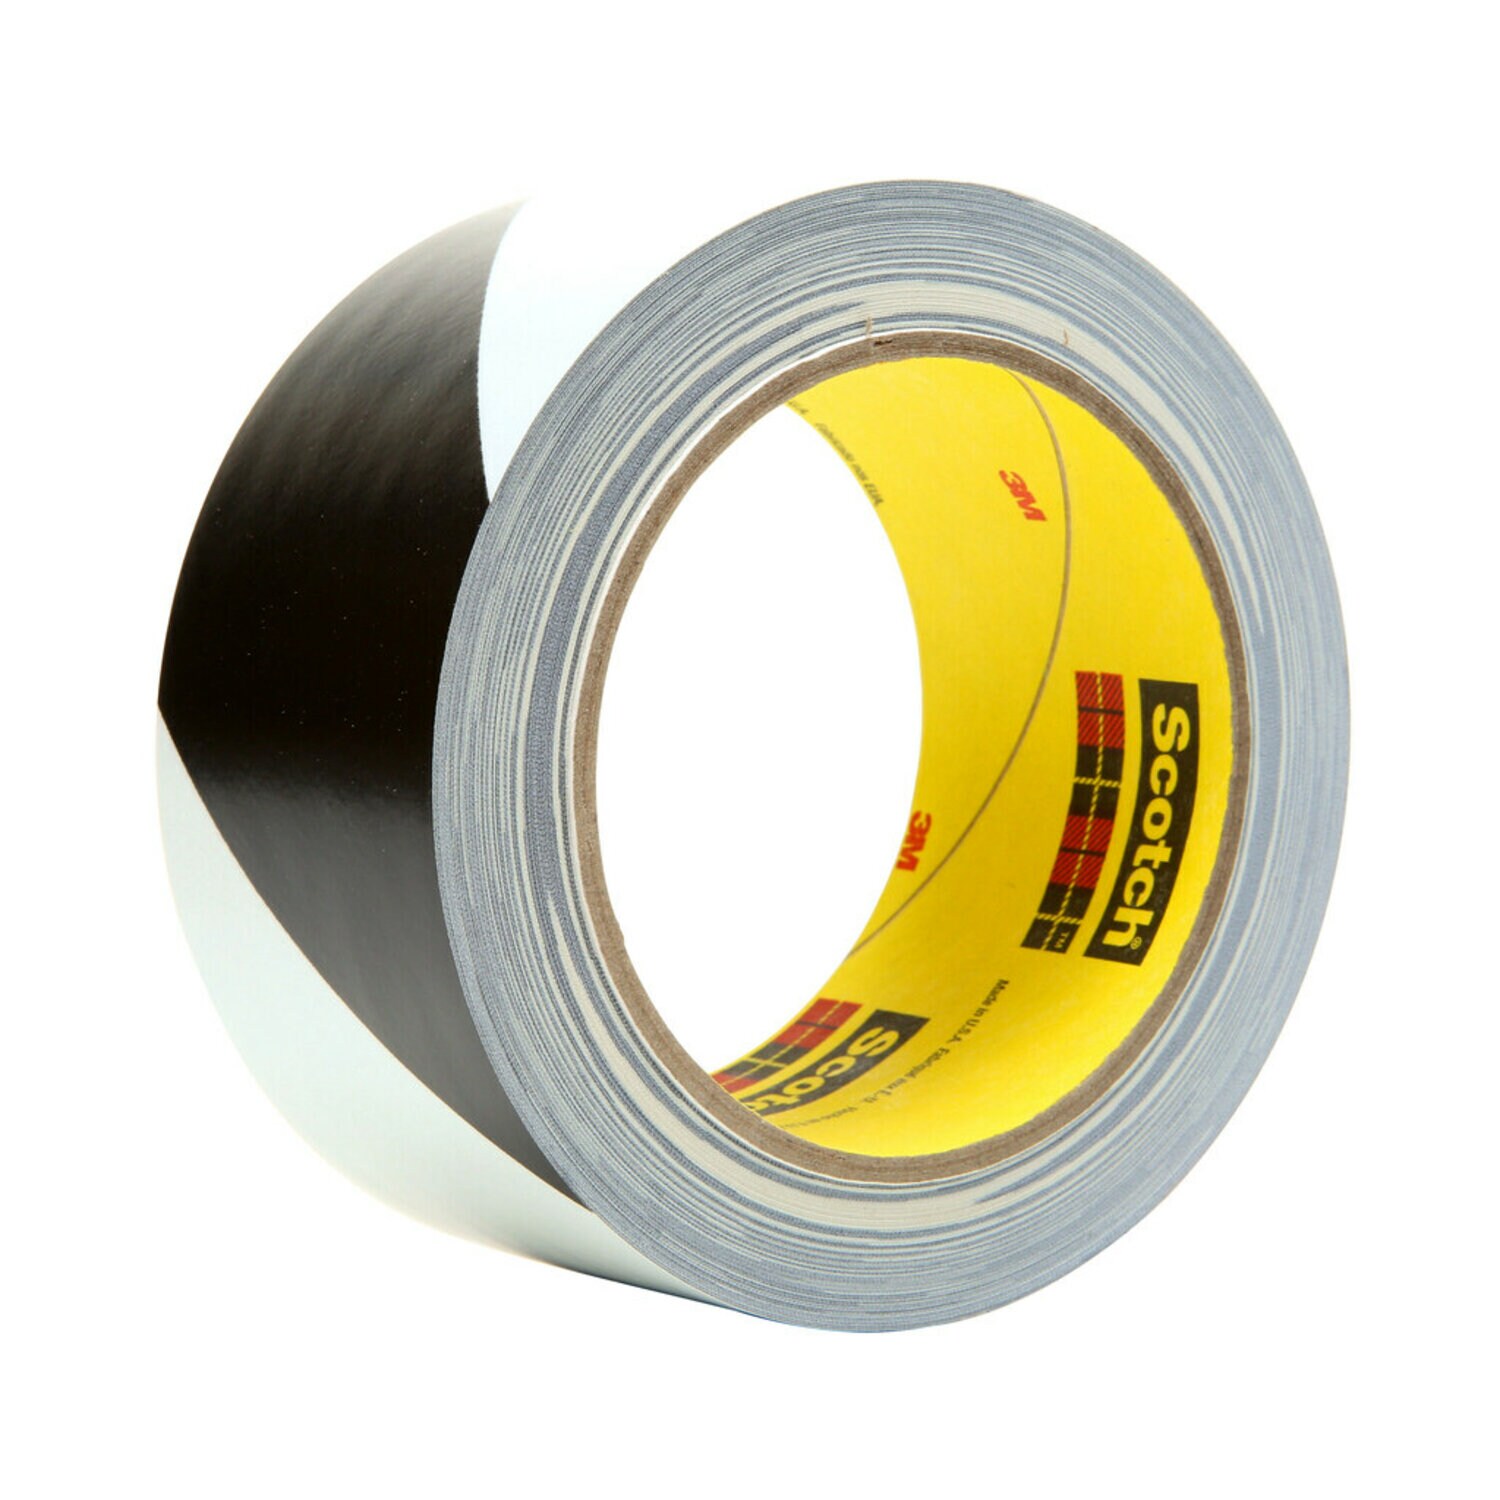 7000048413 - 3M Safety Stripe Vinyl Tape 5700, Black/White, 2 in x 36 yd, 5.4 mil, 24 Roll/Case